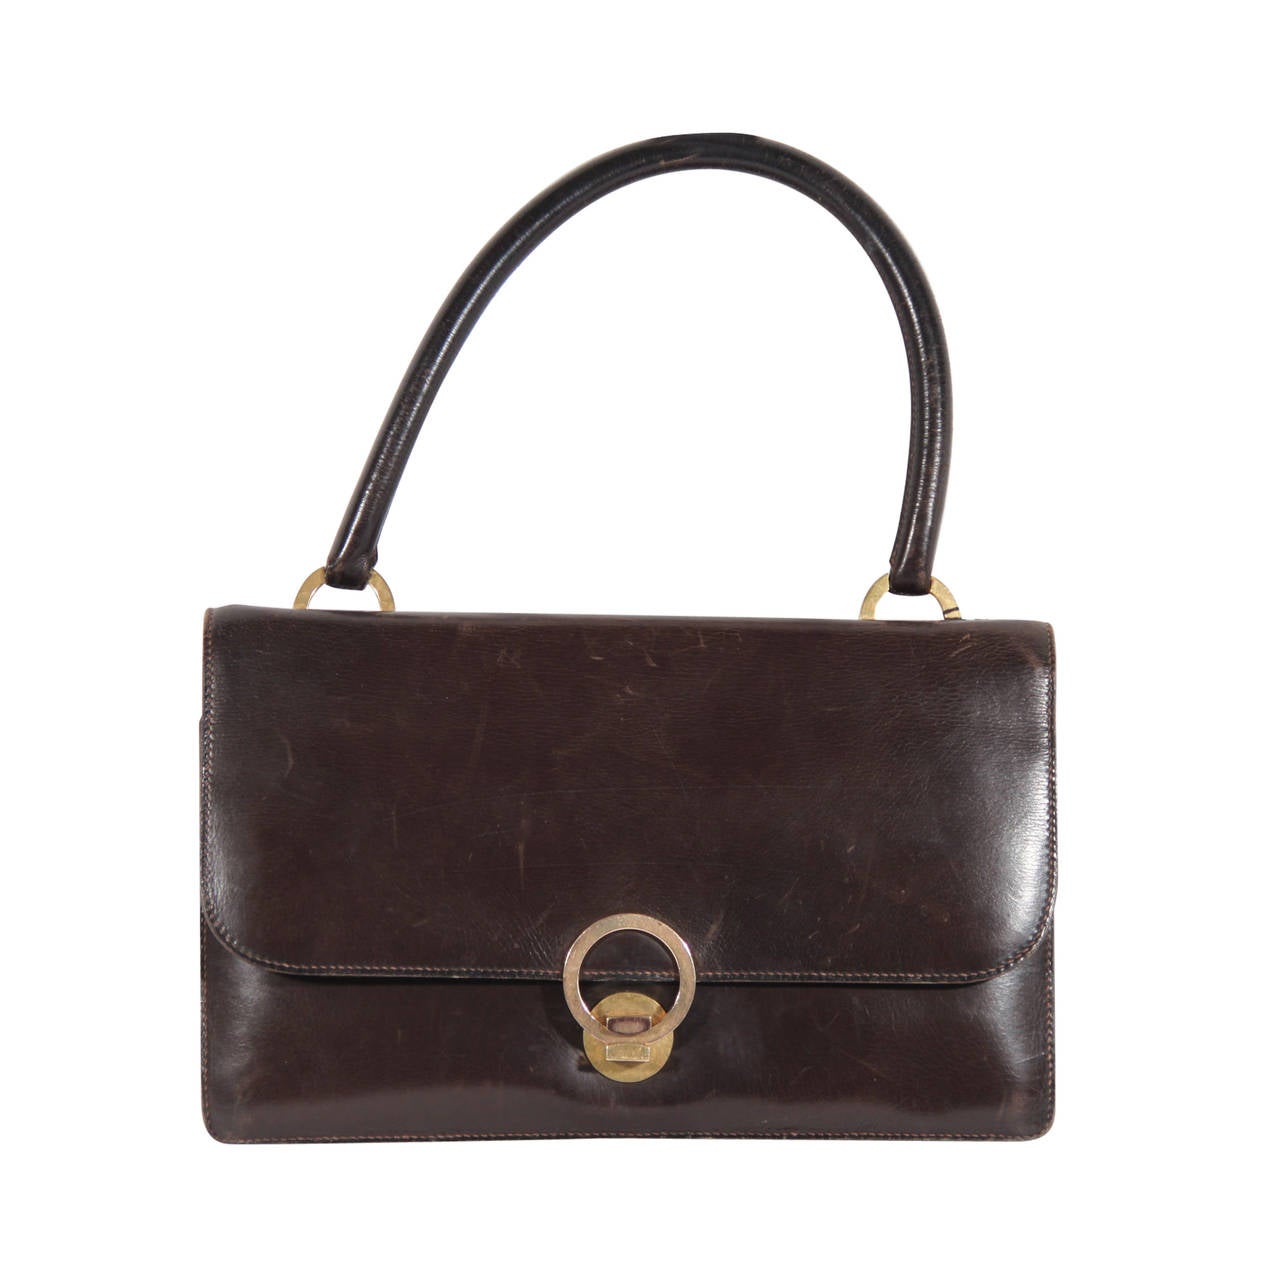 HERMES PARIS Vintage Brown Leather RING BAG Flap Purse HANDBAG